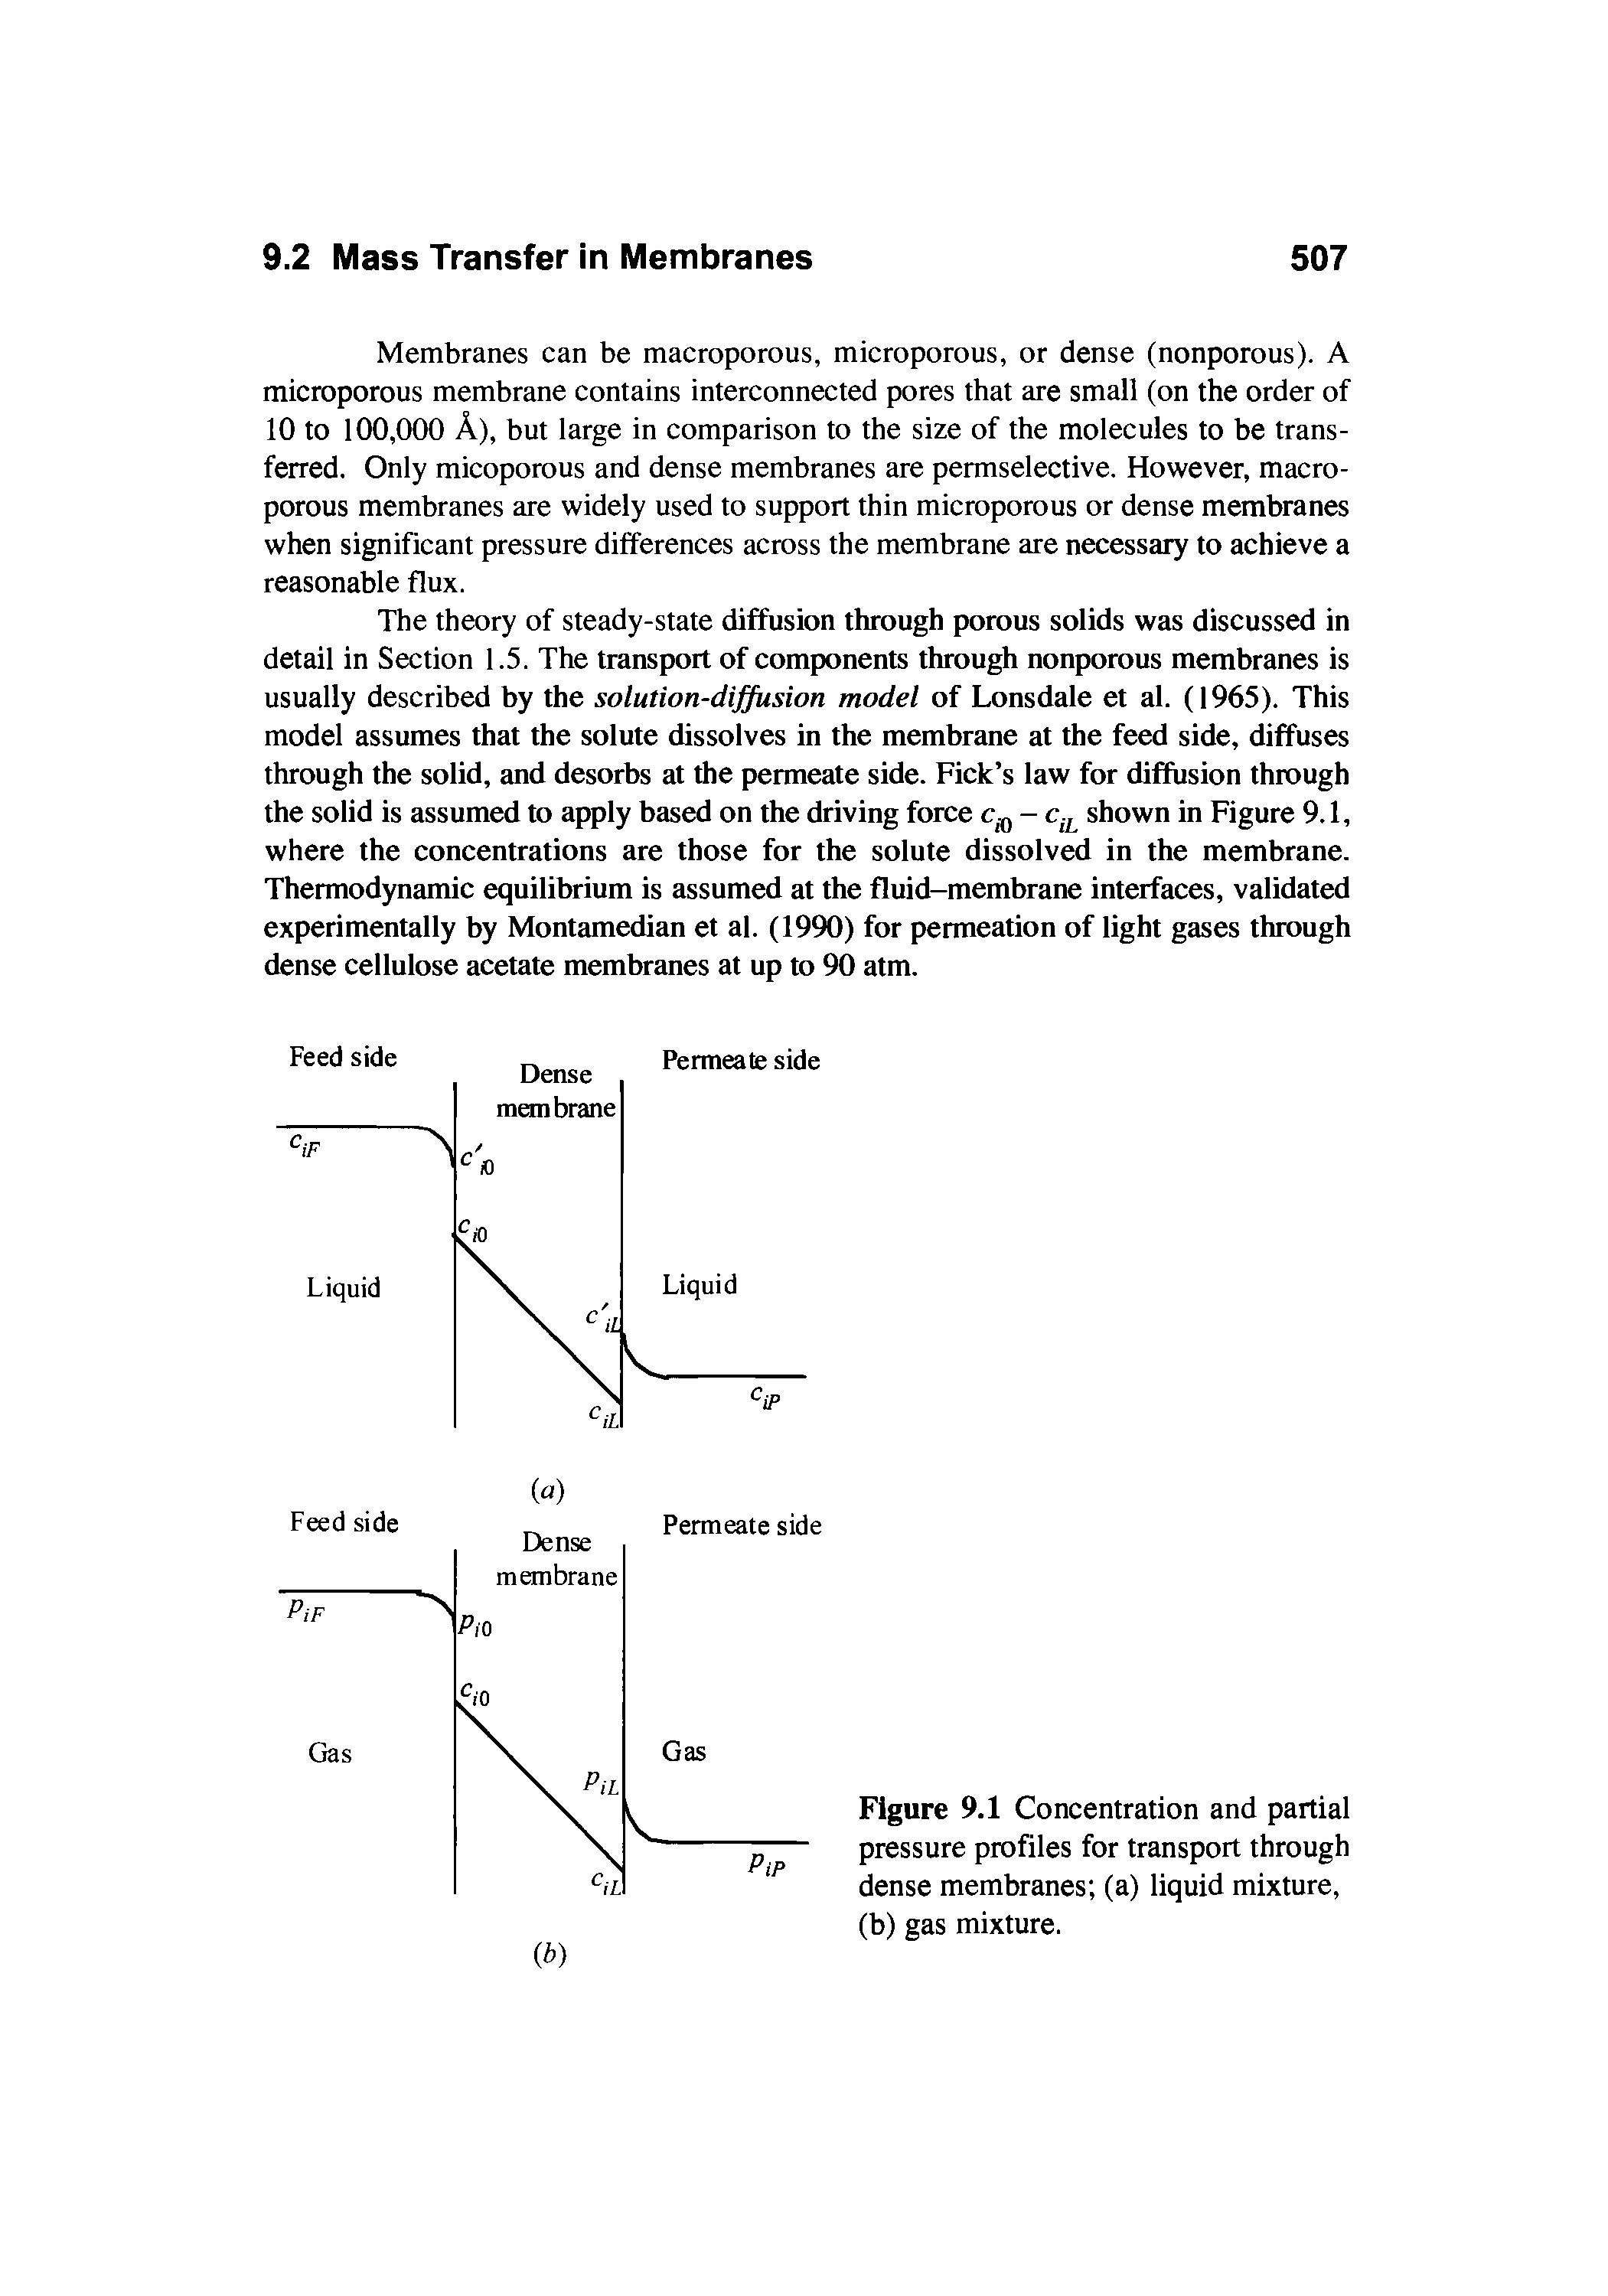 Figure 9.1 Concentration and partial pressure profiles for transport through dense membranes (a) liquid mixture, (b) gas mixture.